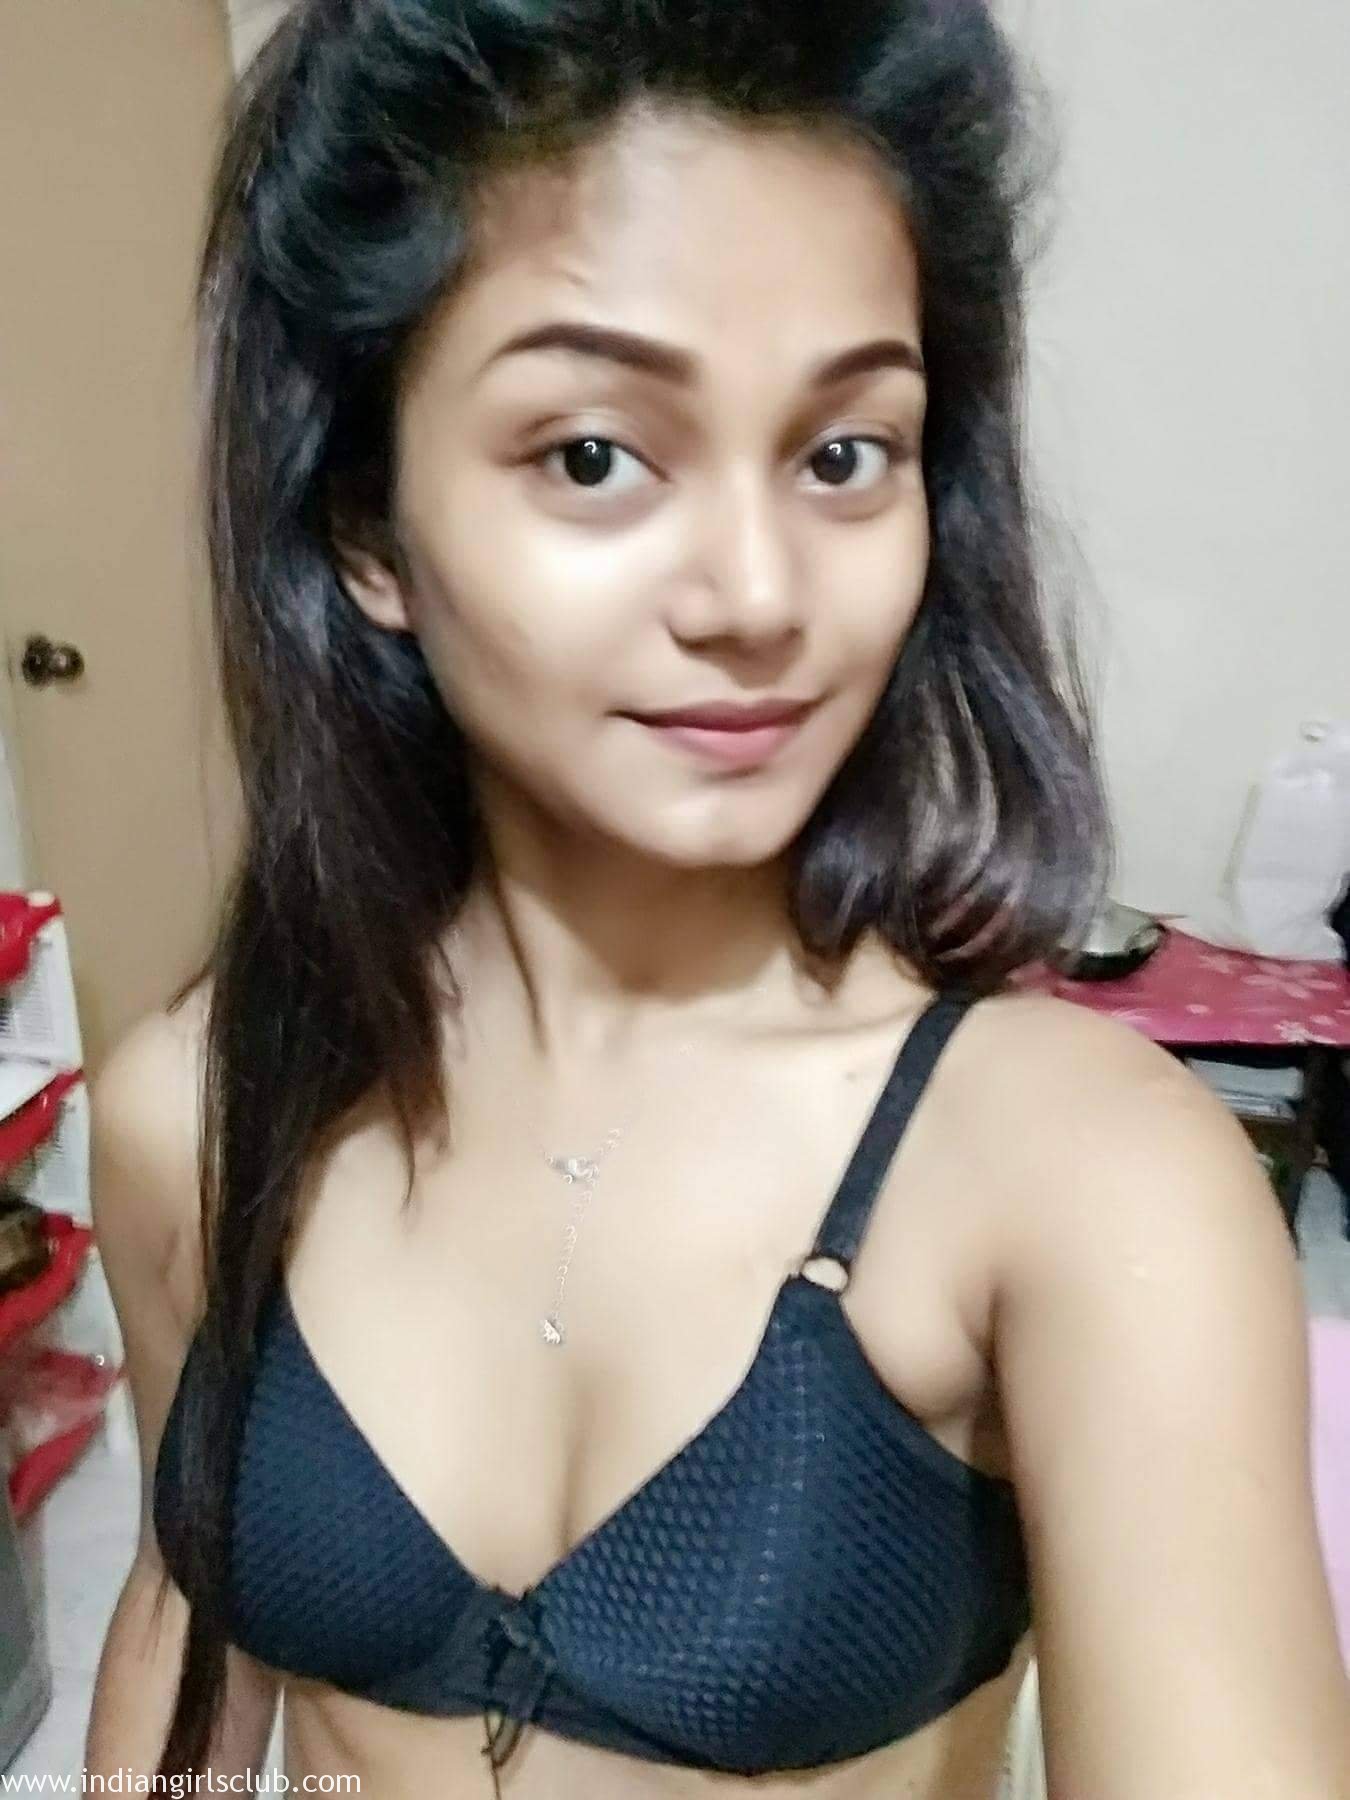 juicy_indian_teen_homemade_porn_16 - Indian Girls Club image